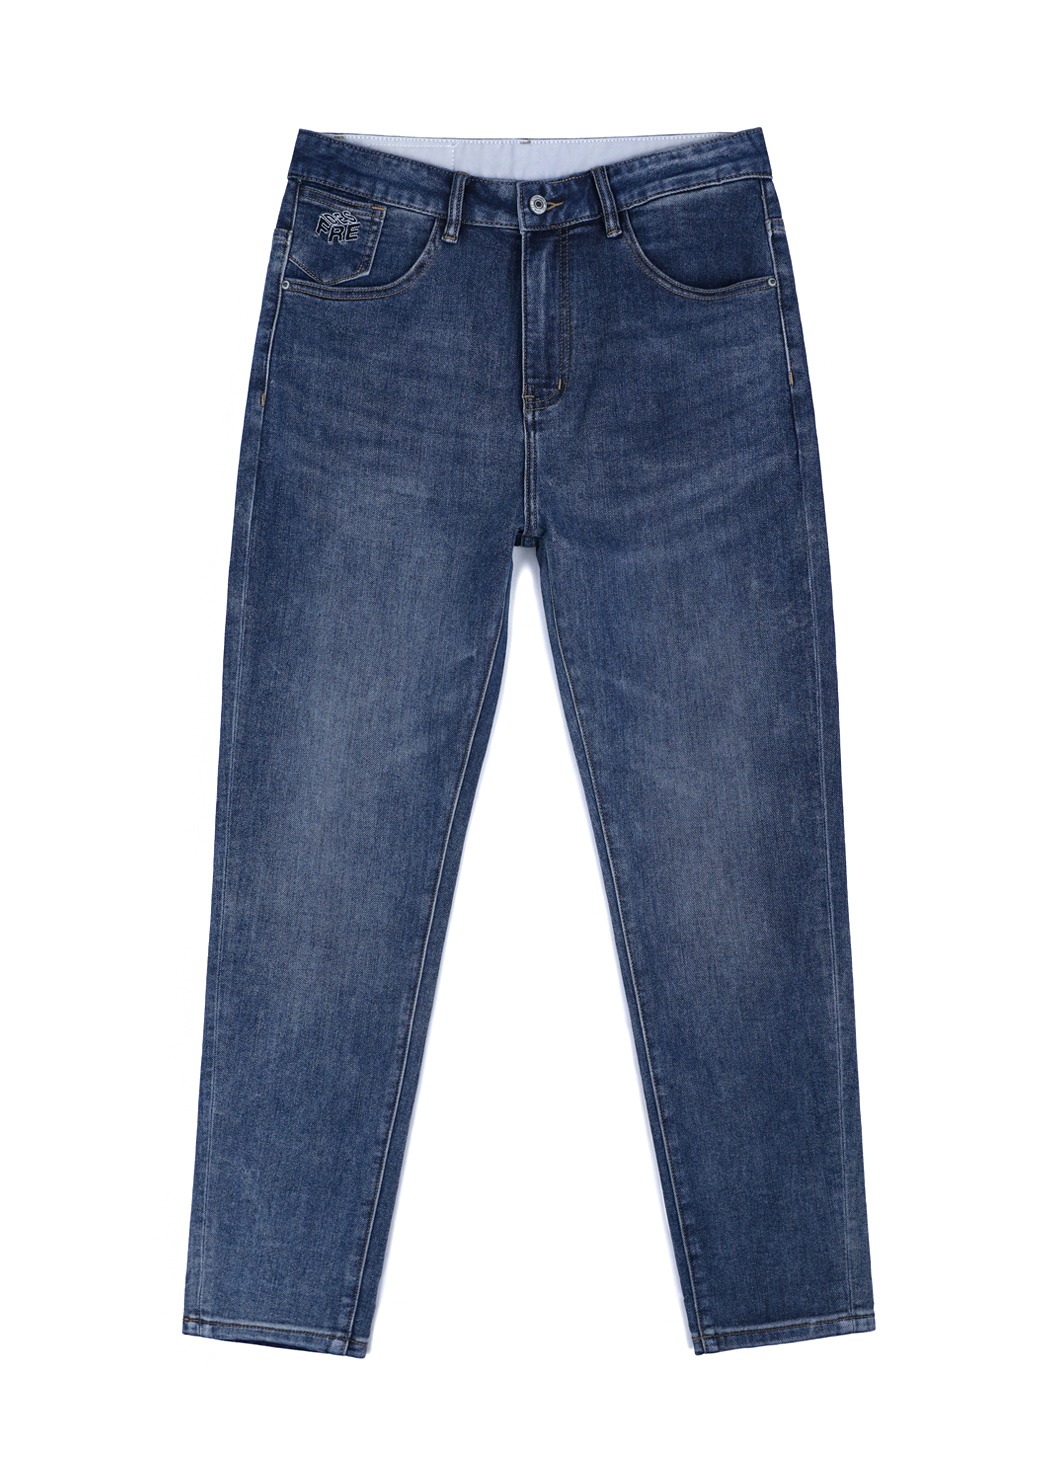 DESFRE Slim Jeans-blue